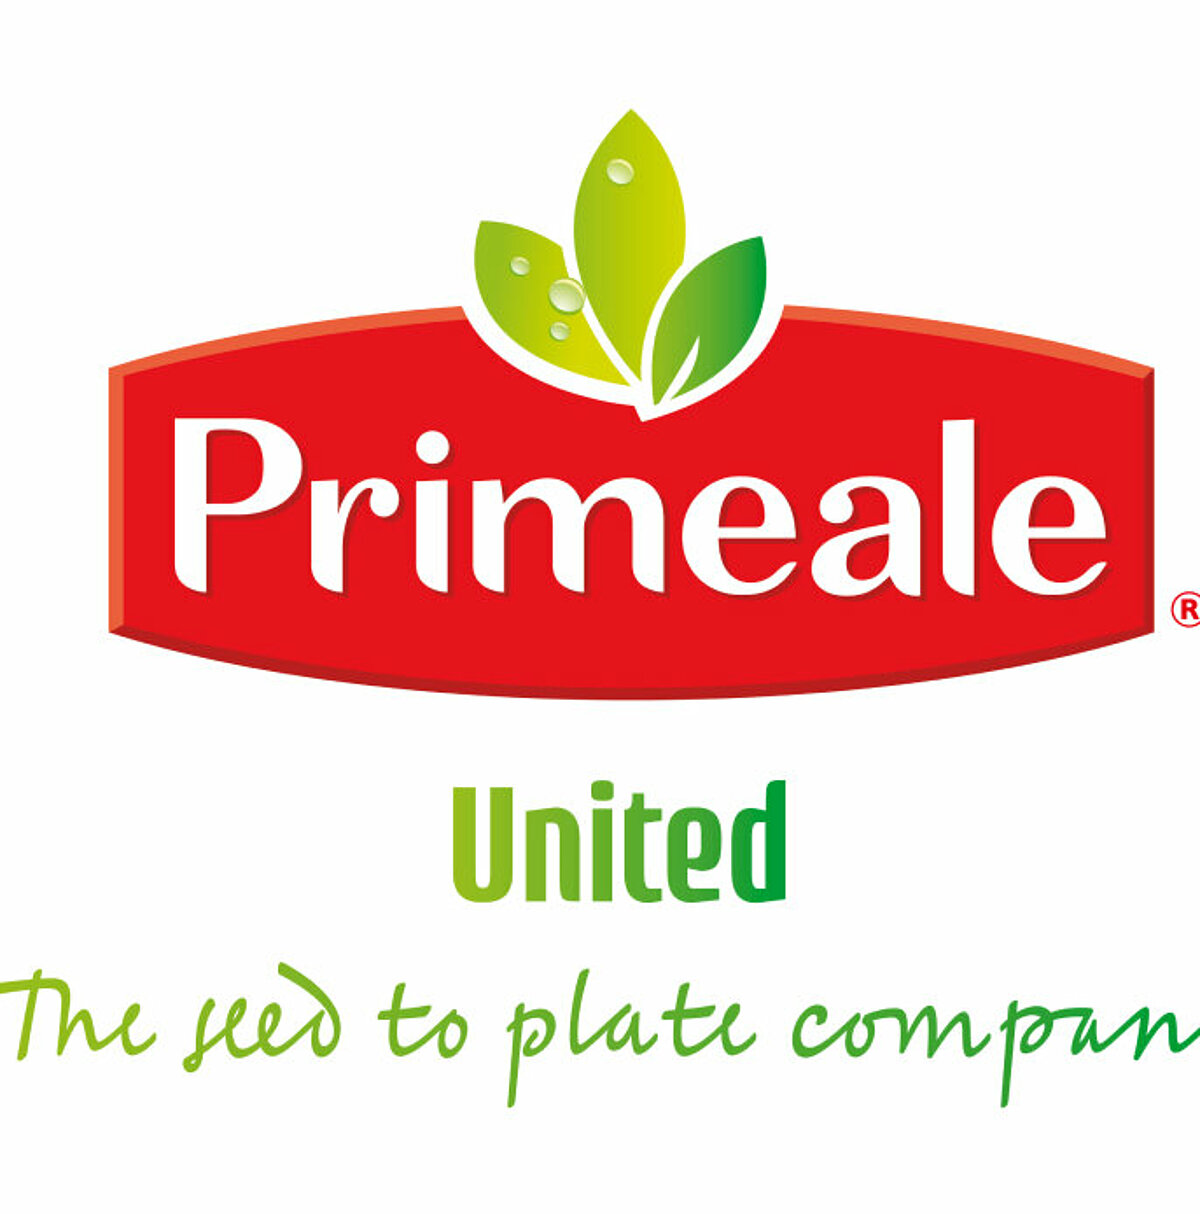 [Translate to French:] Primeale United: De samenwerkingspartner in de groenteteelt